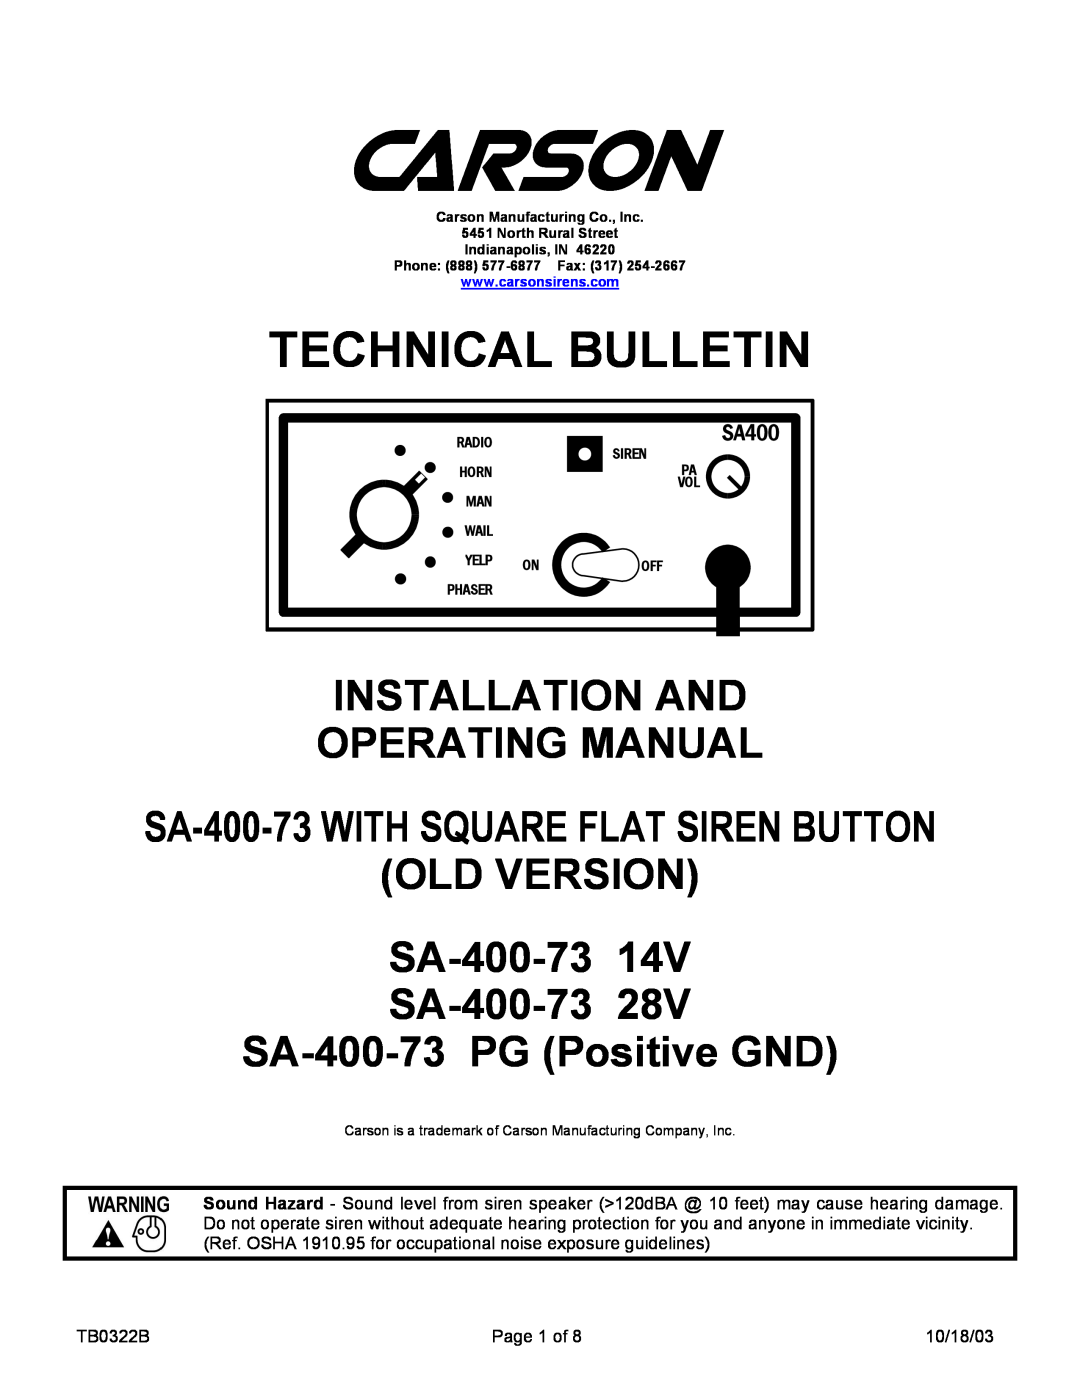 Carson SA-400-73 PG manual Technical Bulletin, Installation And Operating Manual, SA-400-73WITH SQUARE FLAT SIREN BUTTON 